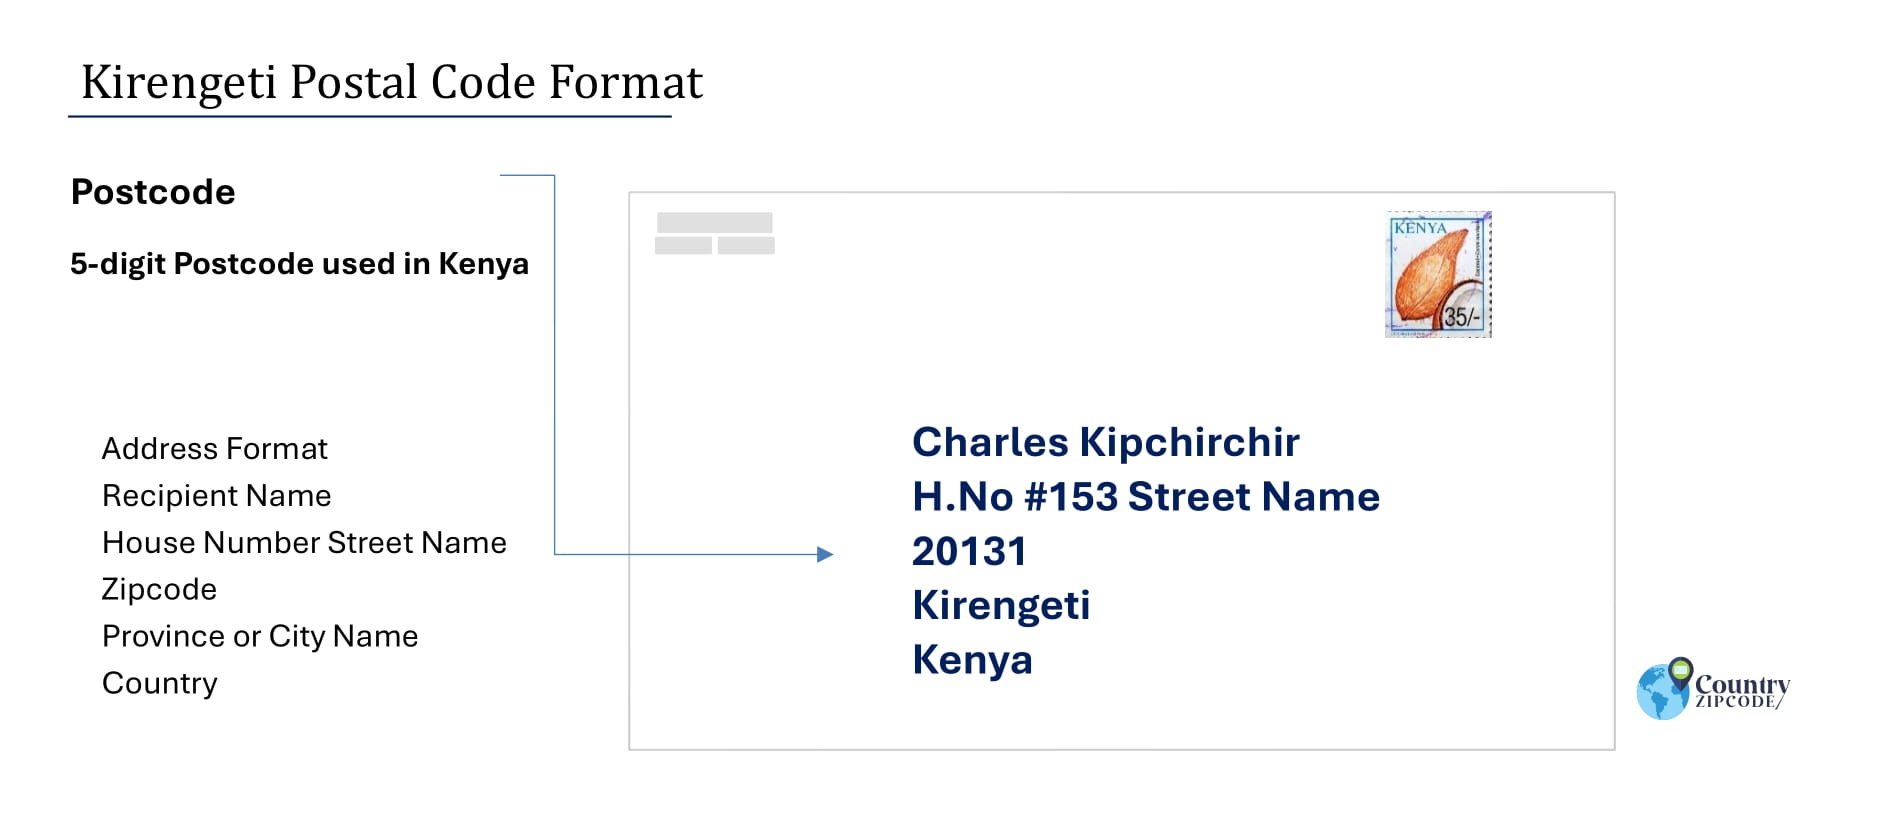 Example of Kirengeti Address and postal code format